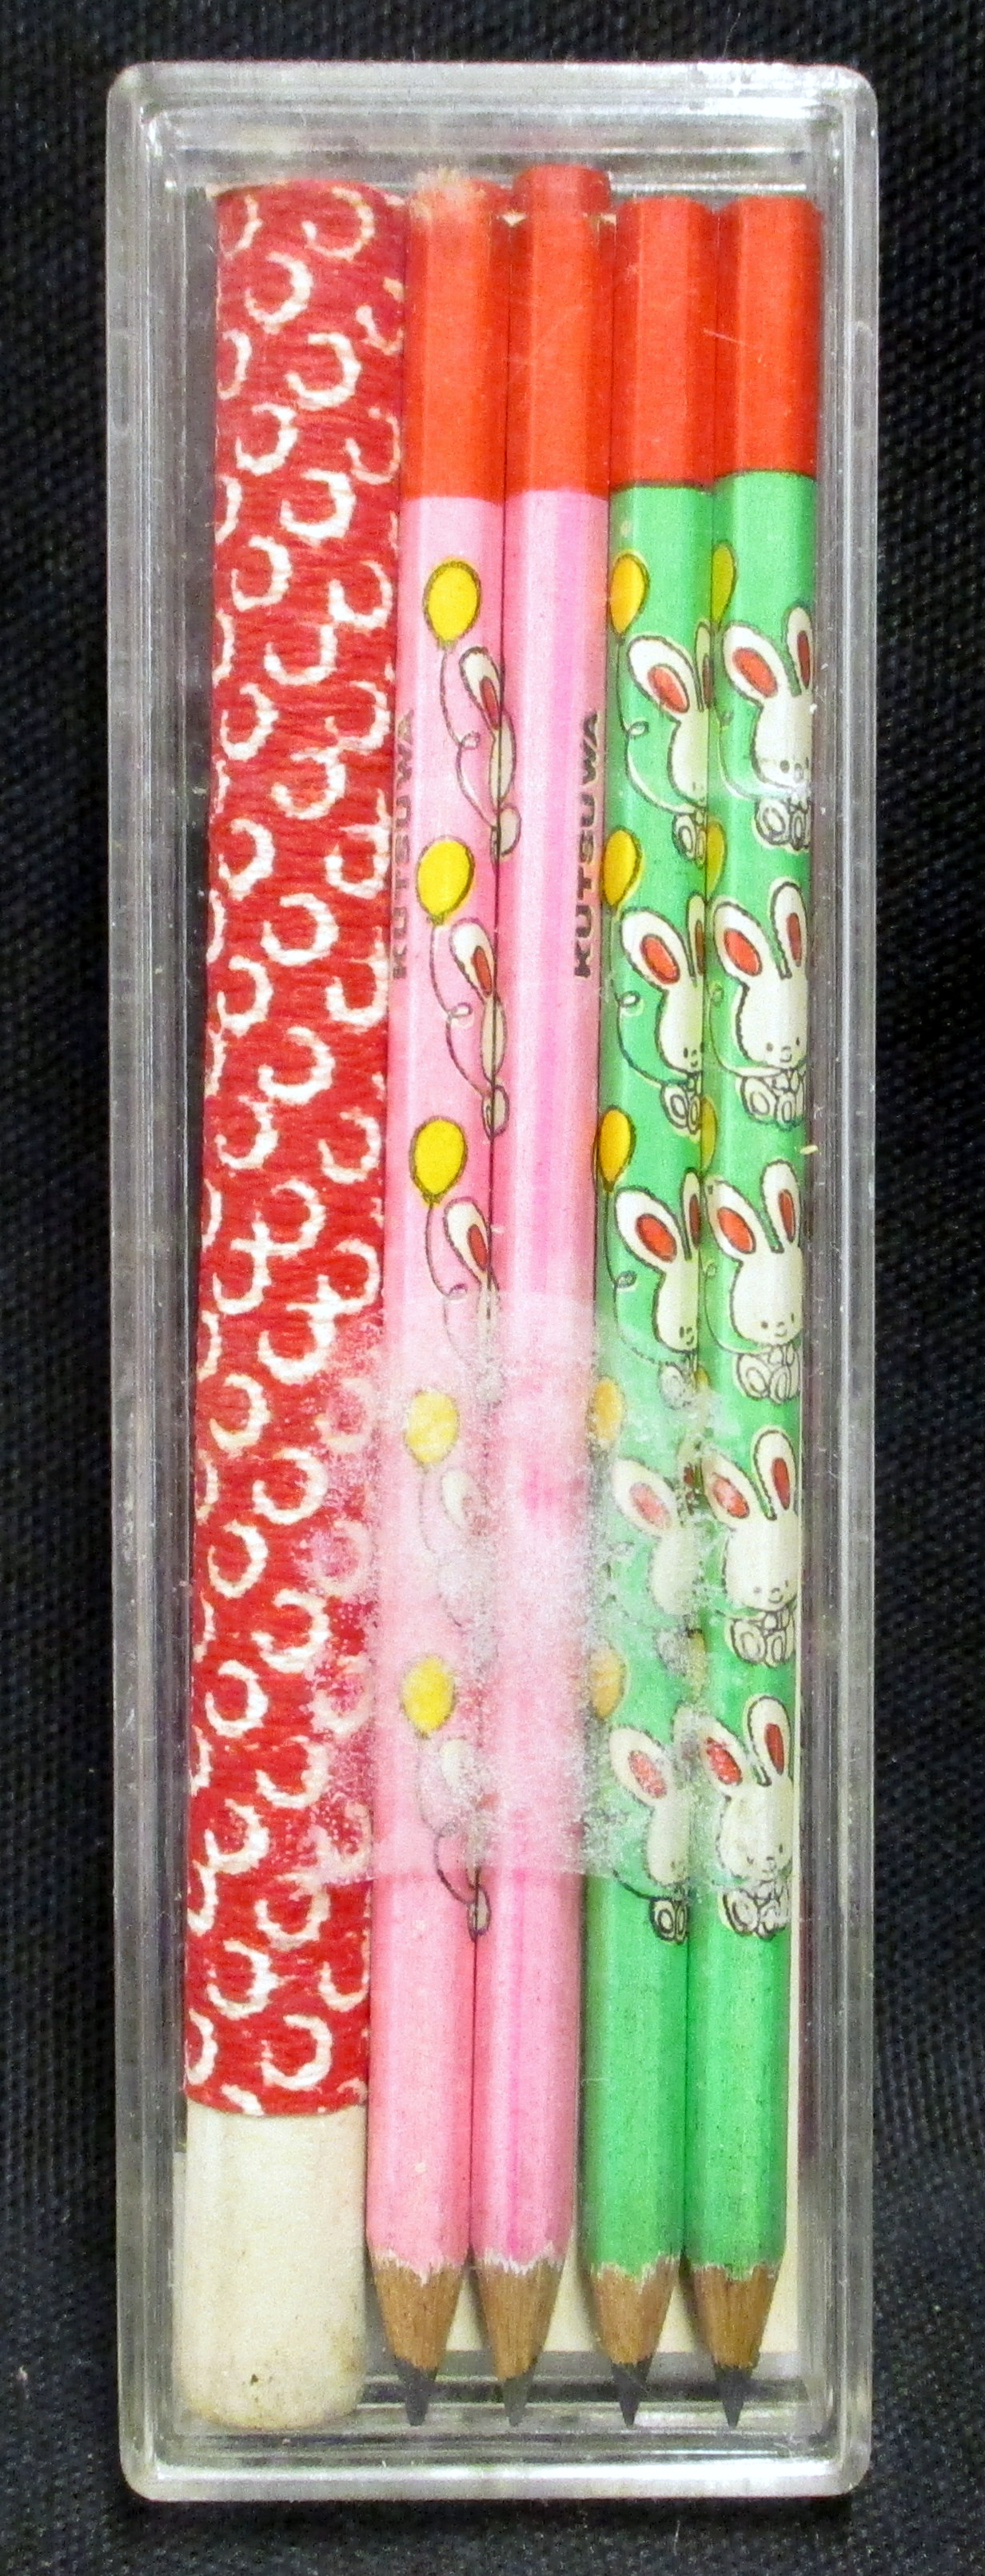 Kutsuwa mini stationery set (8 pencils, stick Keshigomu) Mandarake  Online Shop